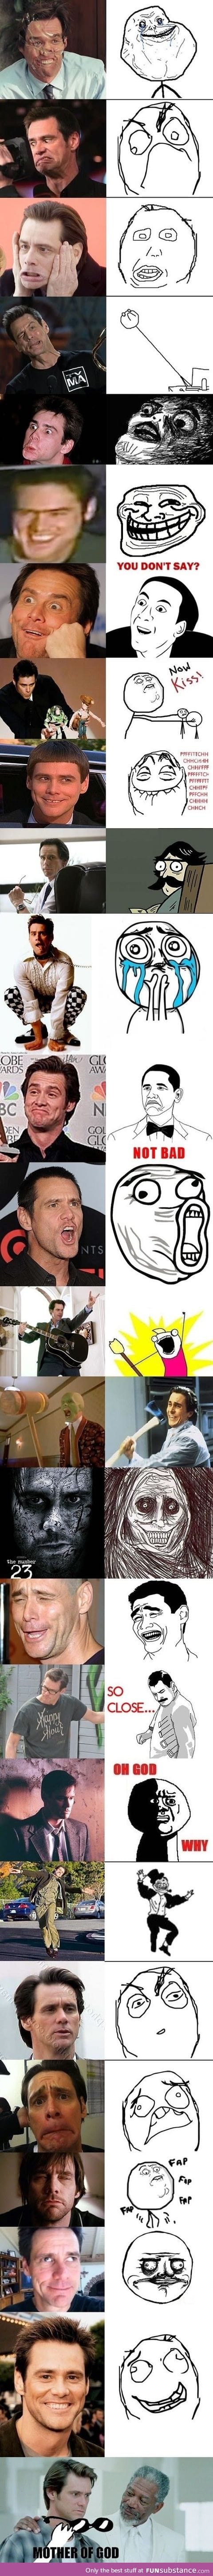 Jim Carrey as rage faces